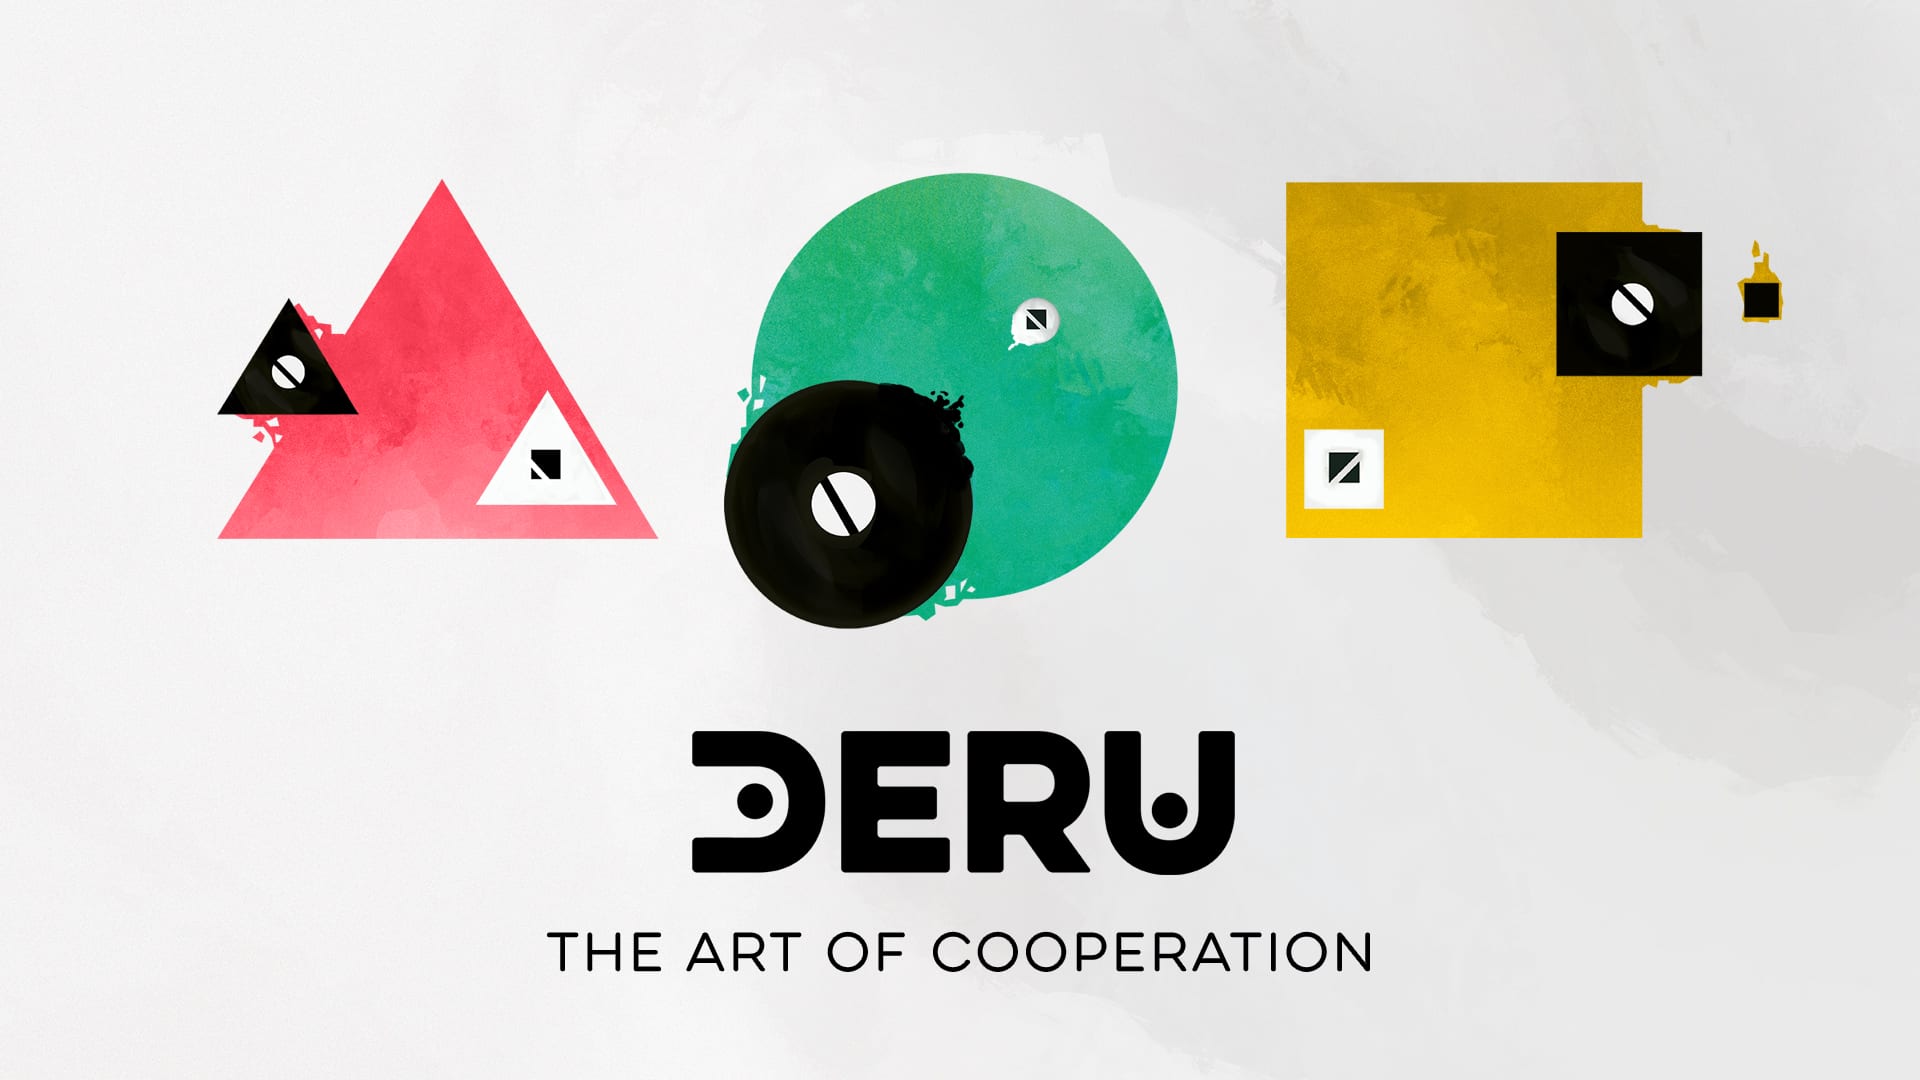 Deru - The Art of Cooperation